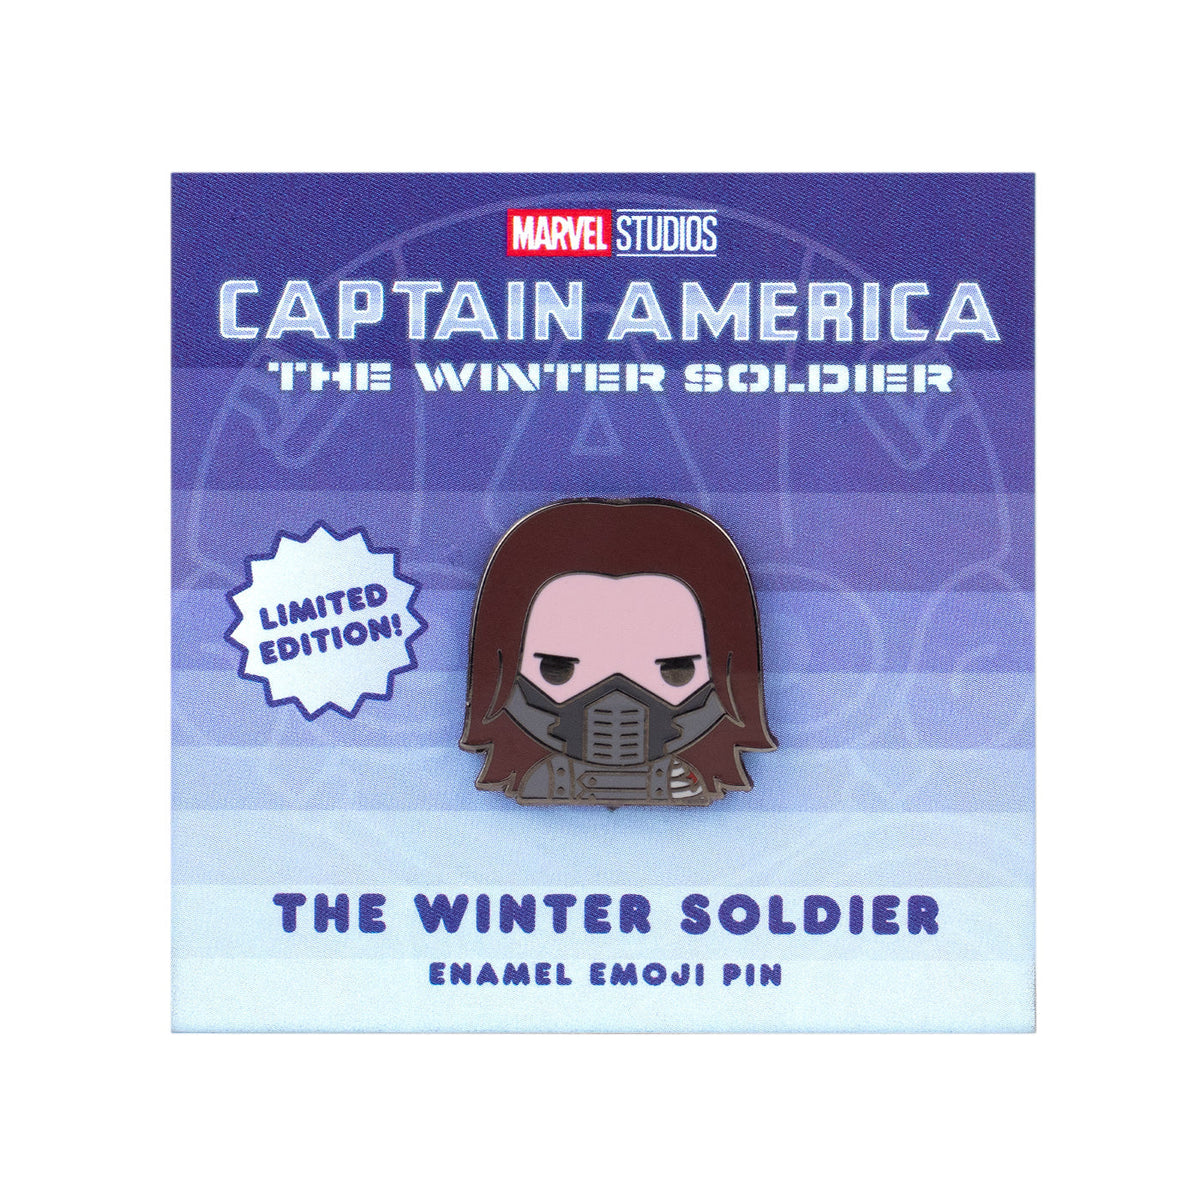 The Winter Soldier Enamel Pin